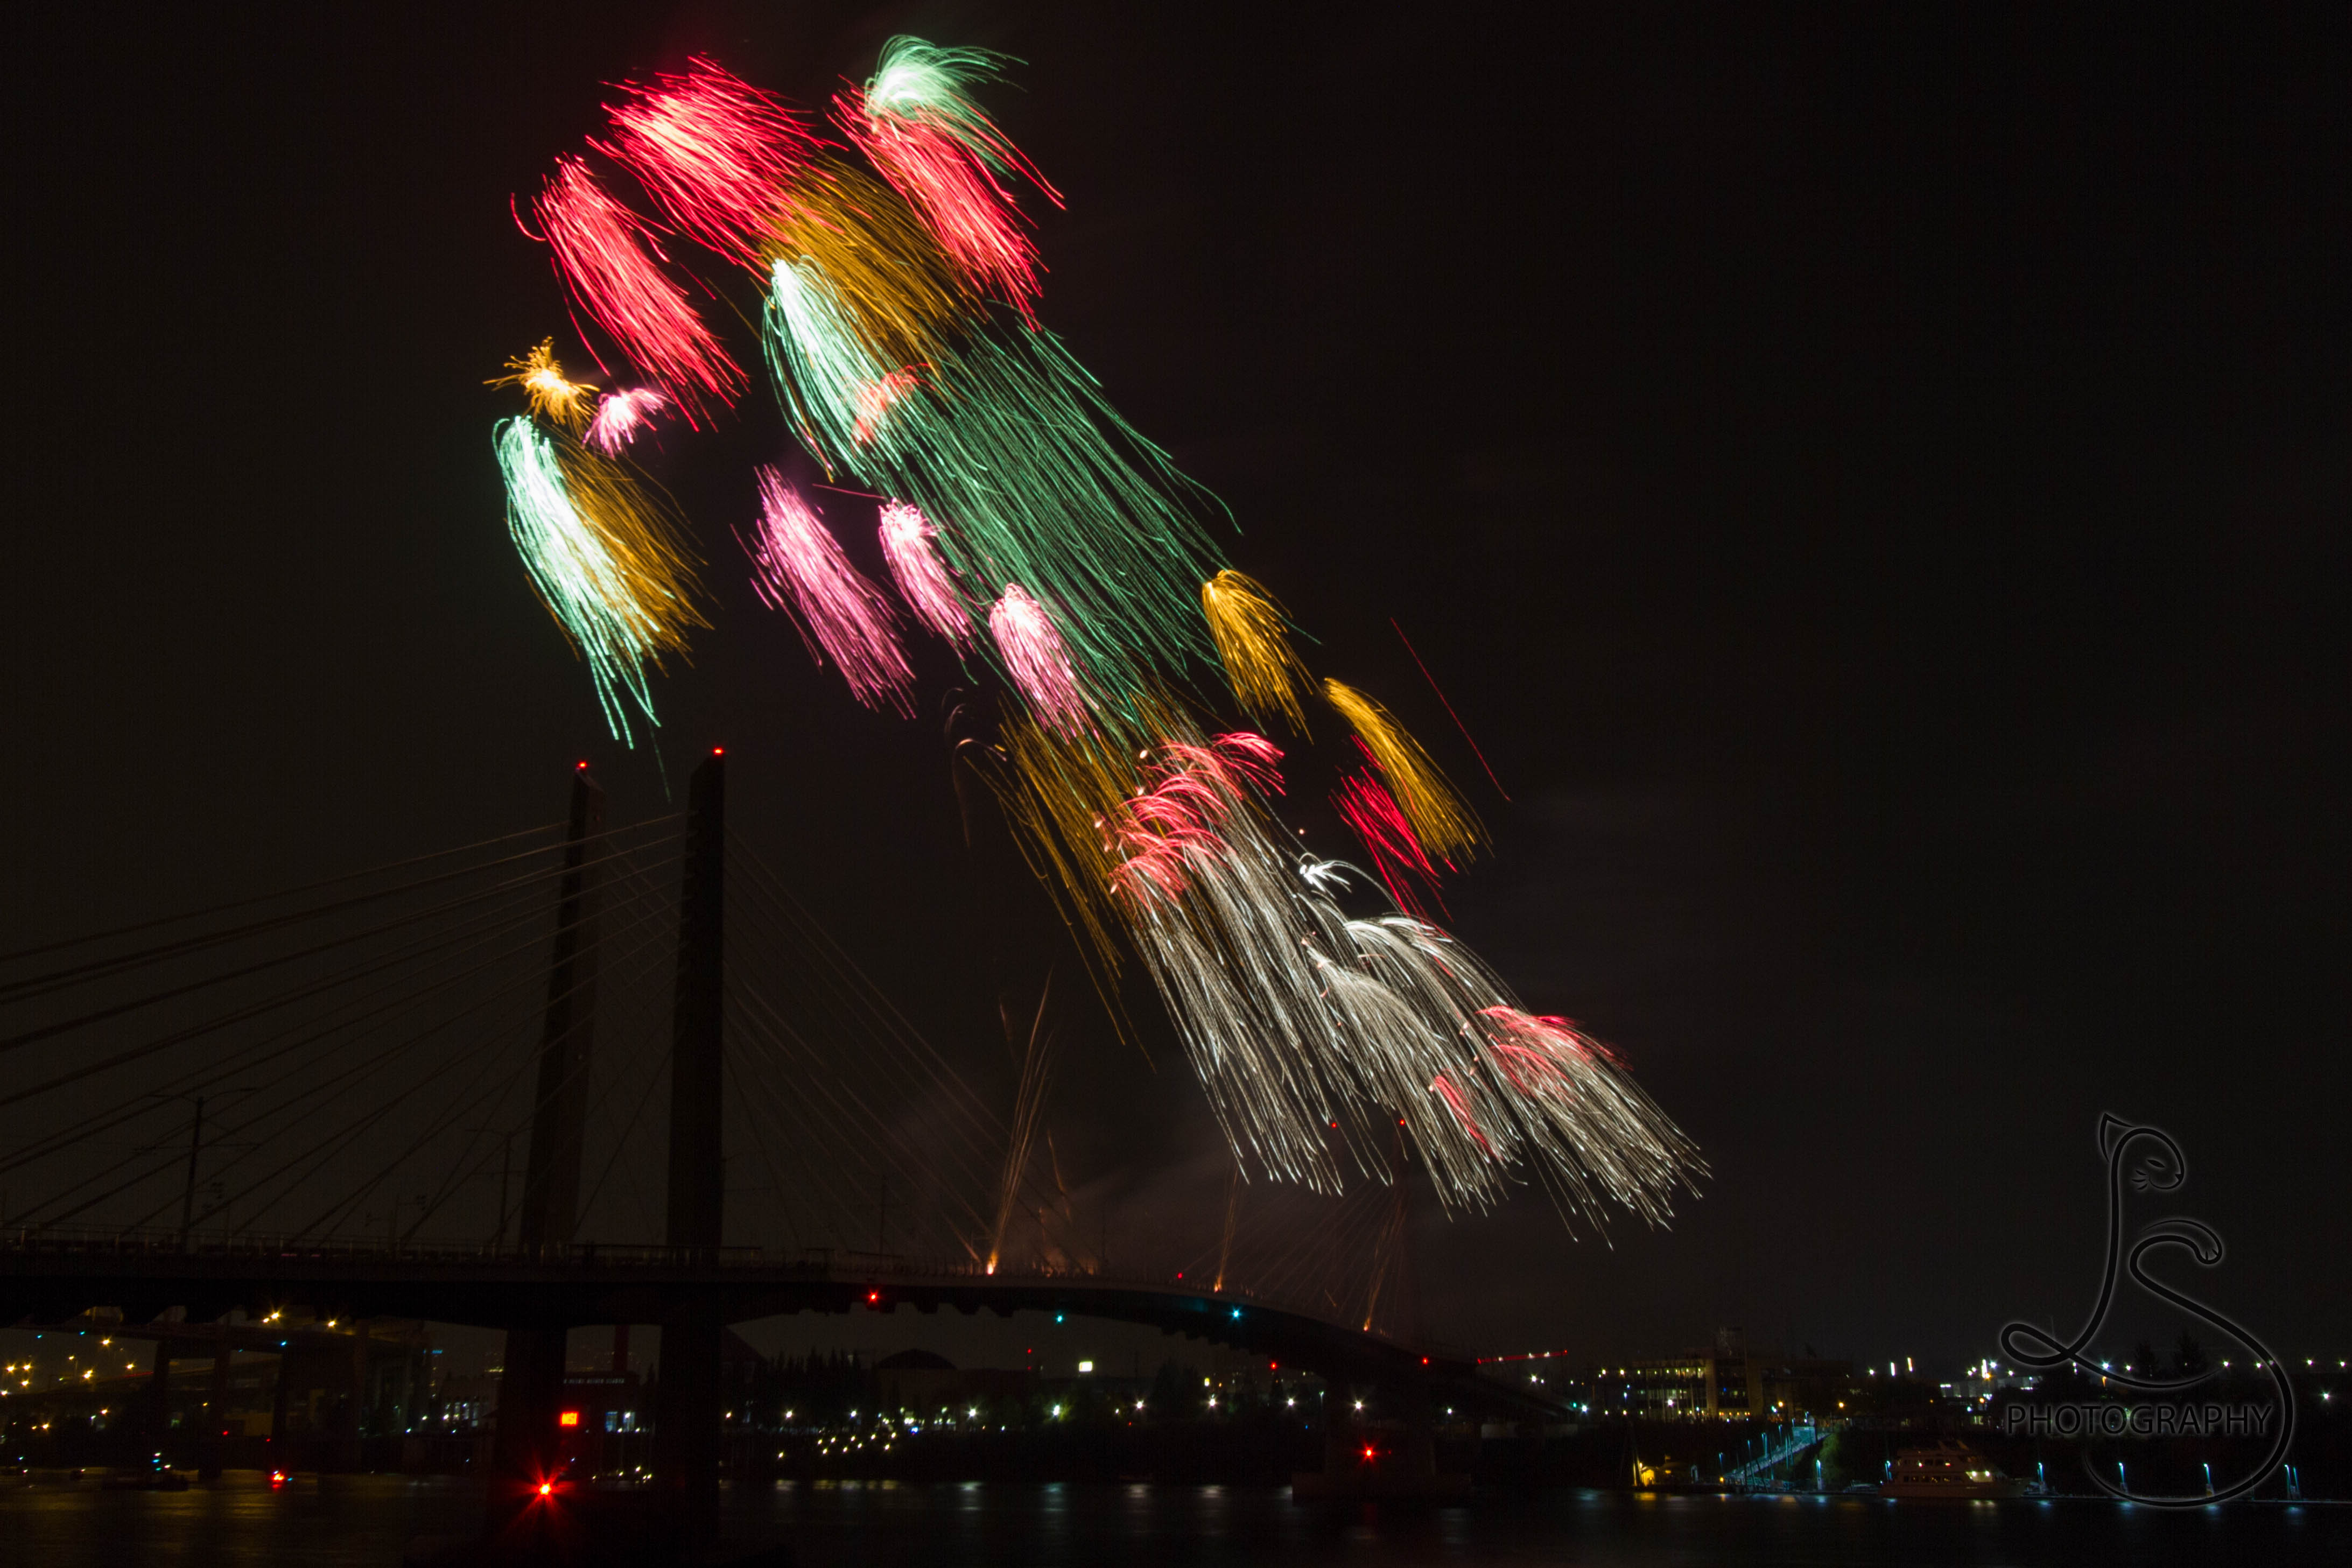 Multicolored streams of fireworks lighting the sky above Portland's Tilikum Crossing | LotsaSmiles Photograhy